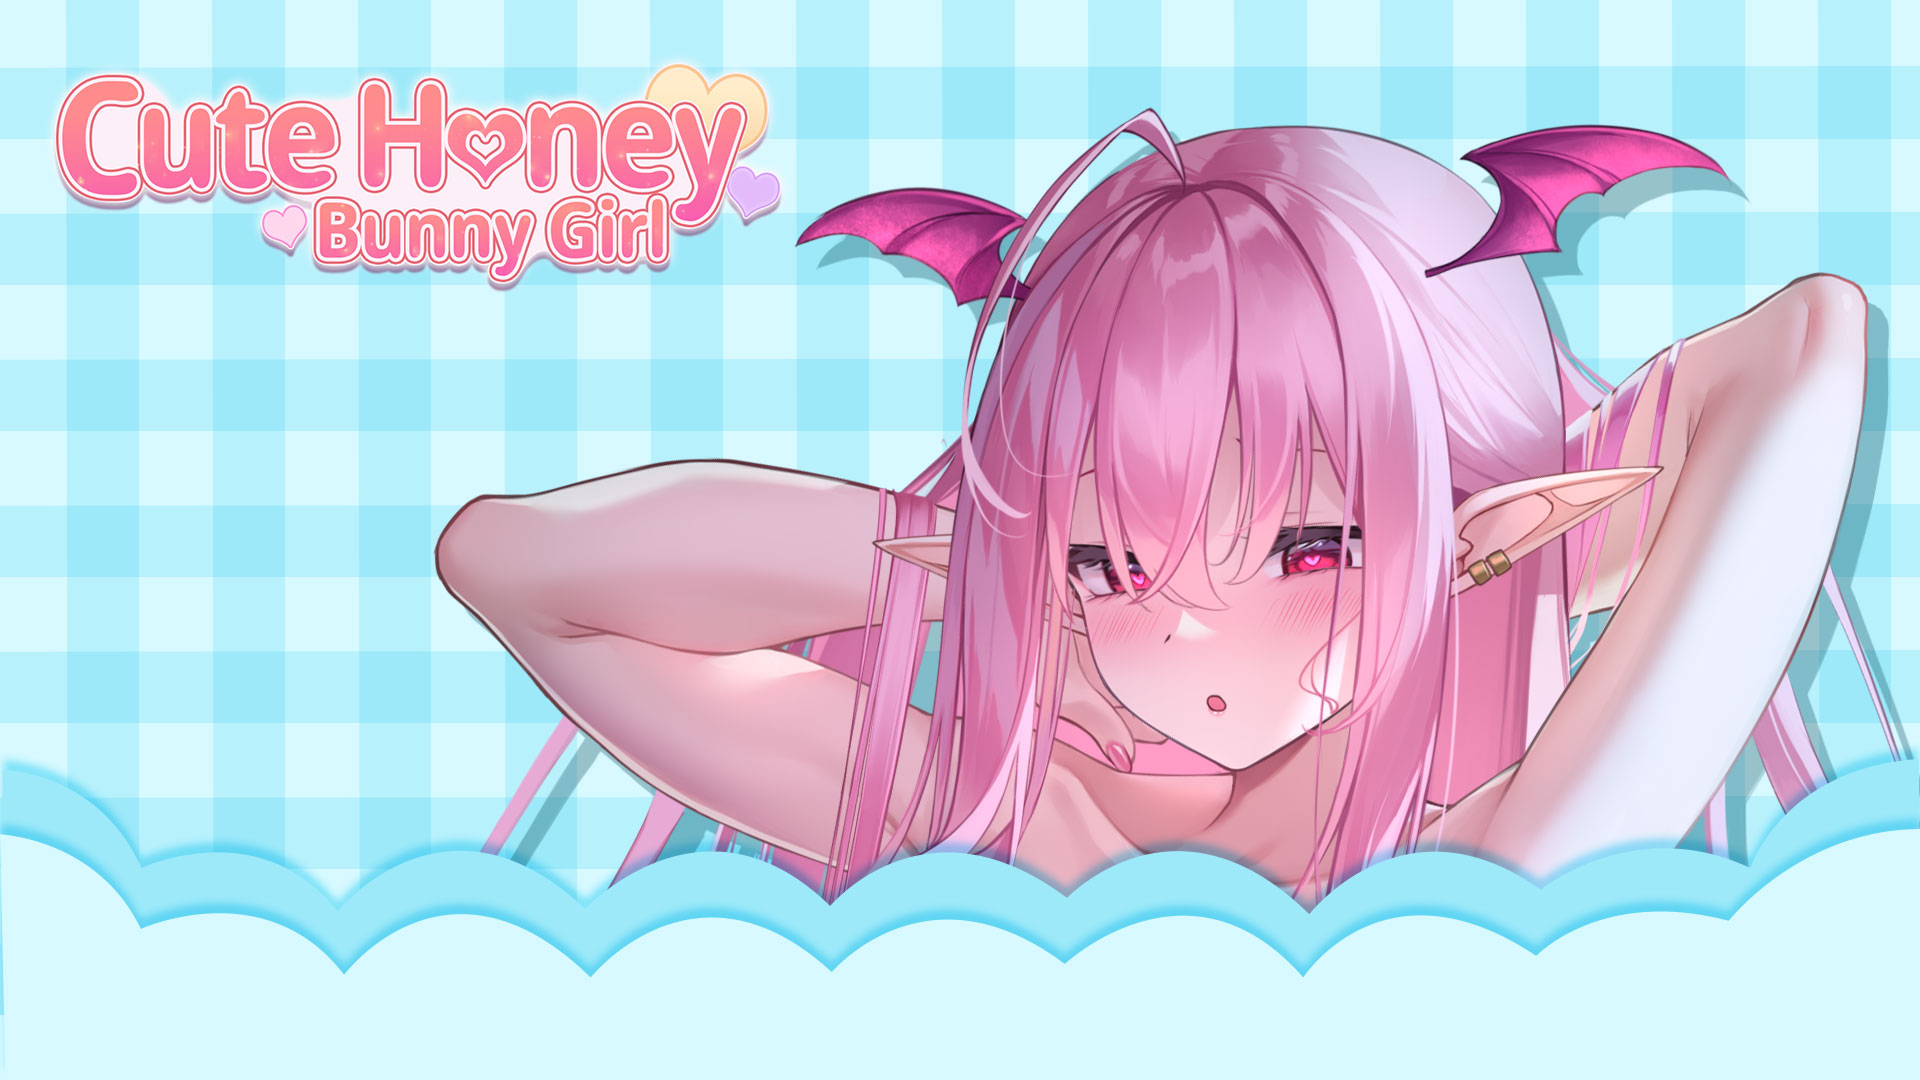 Cute honey: bunny girl